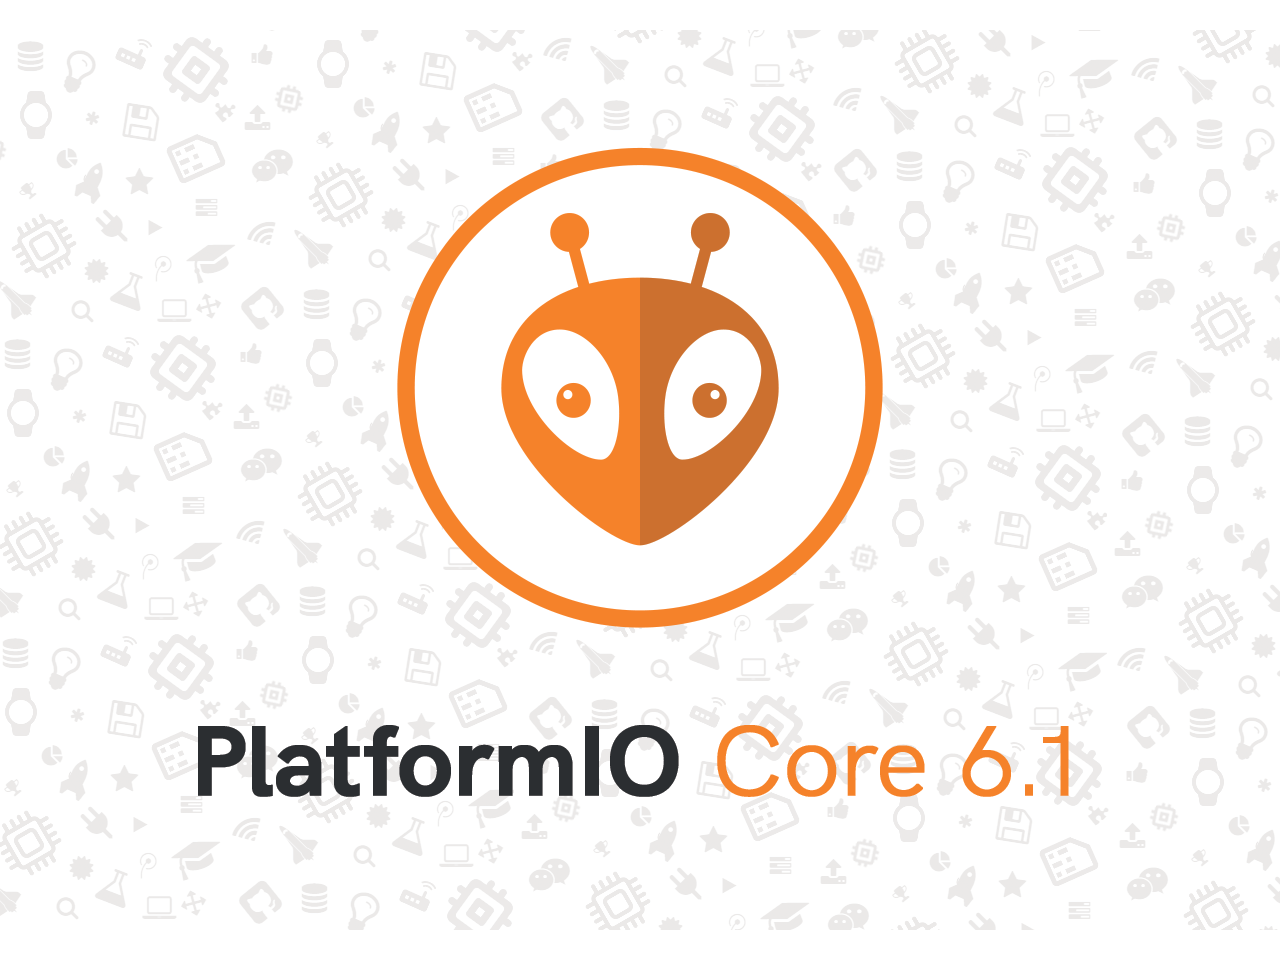 PlatformIO Core 6.1